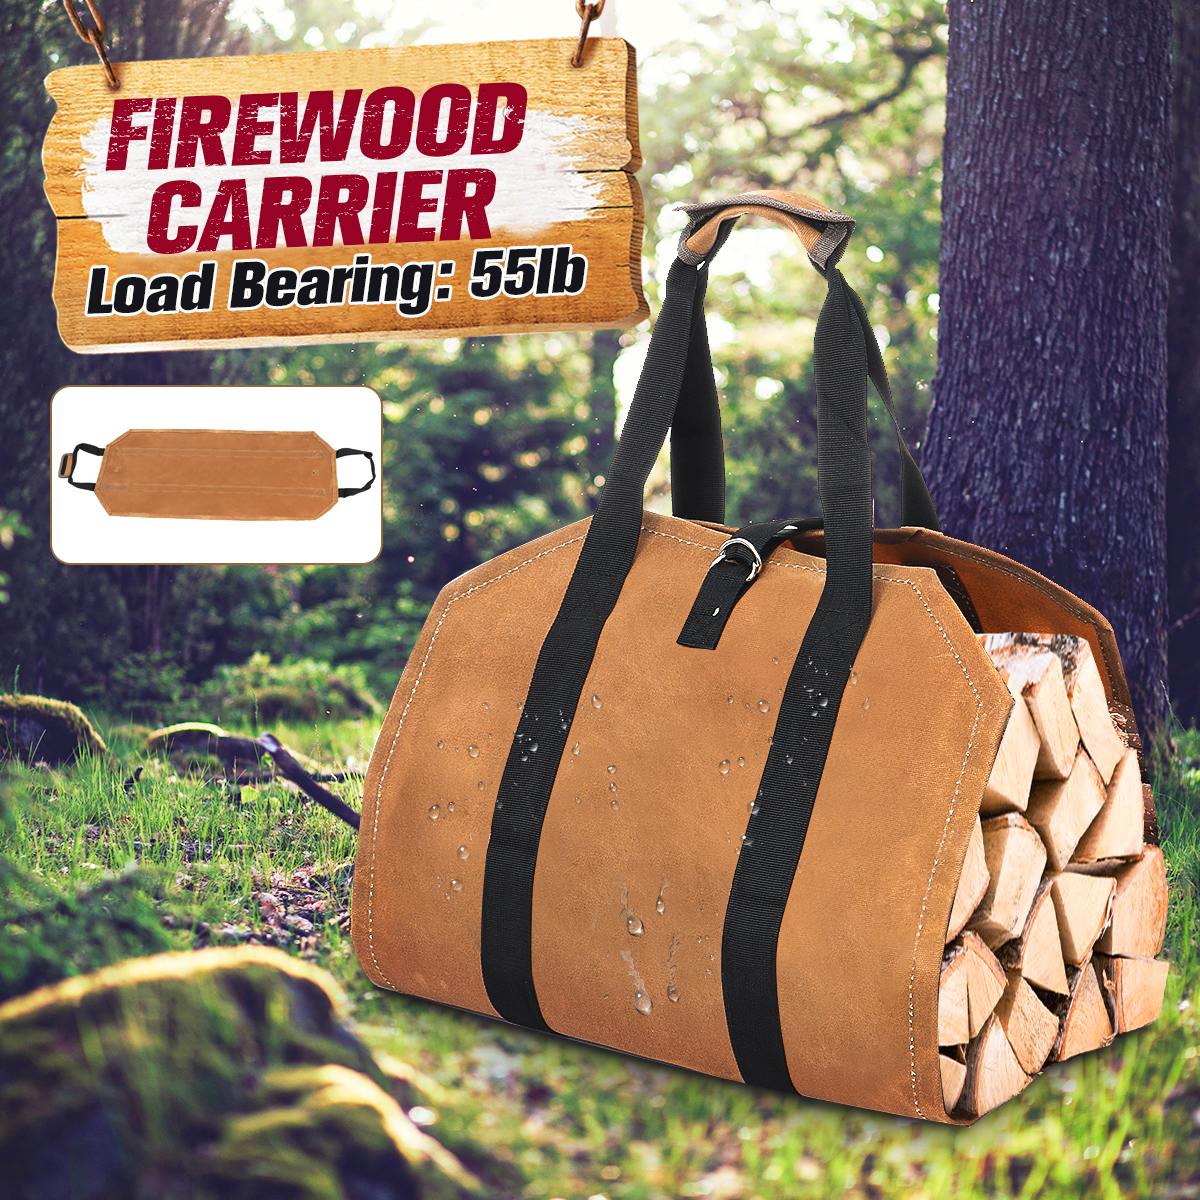 Firewood-Carrier-Holder-Canvas-Tote-Bag-Wood-Bag-Wood-Storage-Organizer-Waterproof-Portable-Outdoor--1889169-1